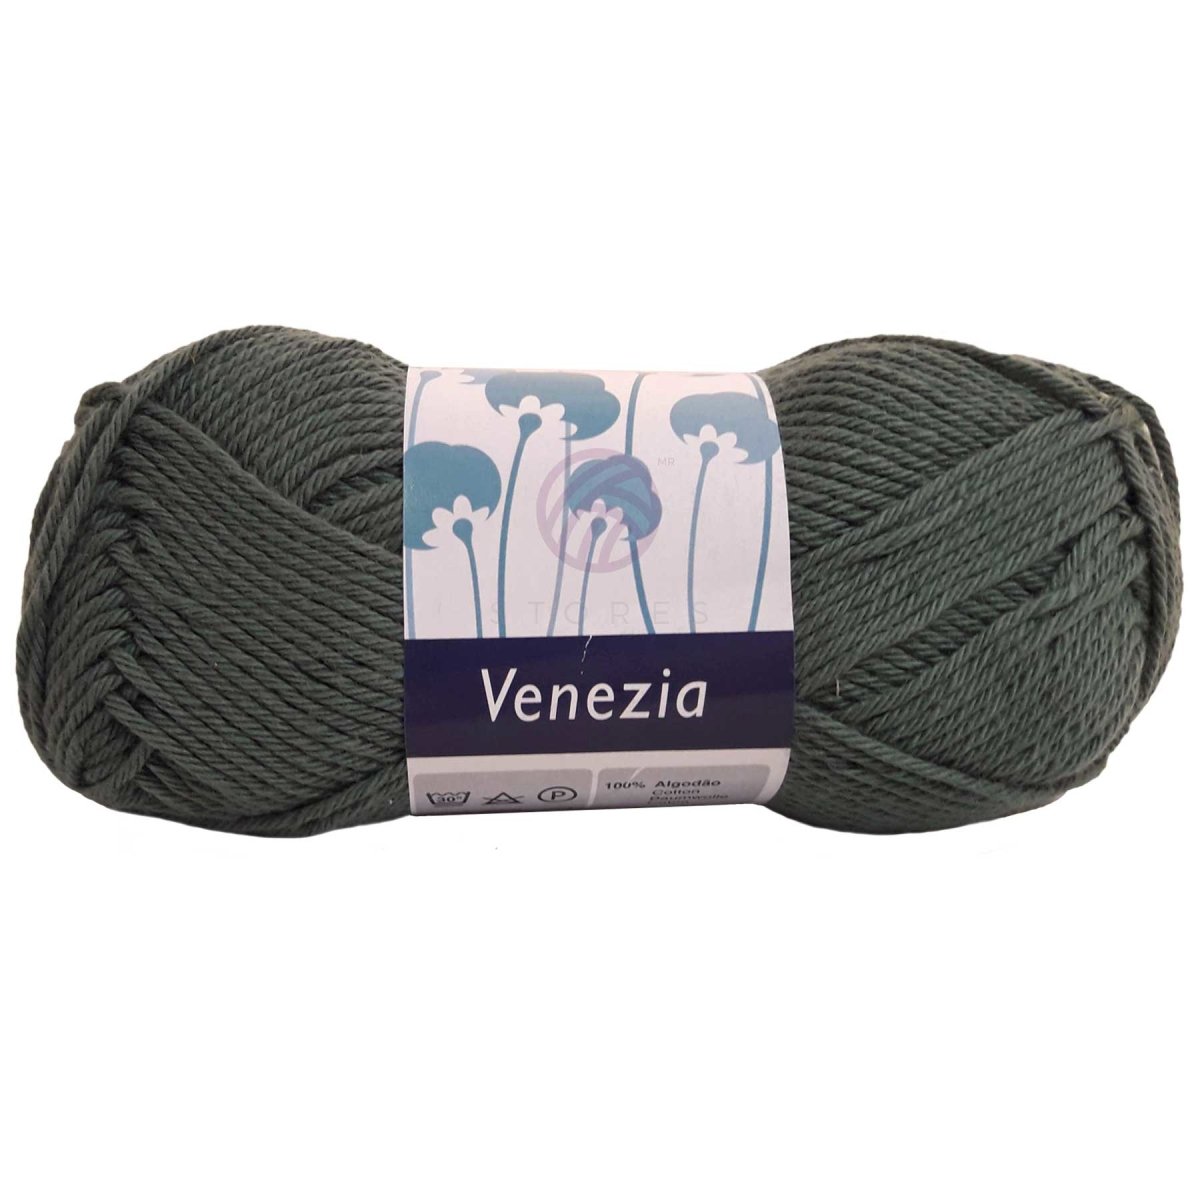 VENEZIA - Crochetstores204-205606850204206